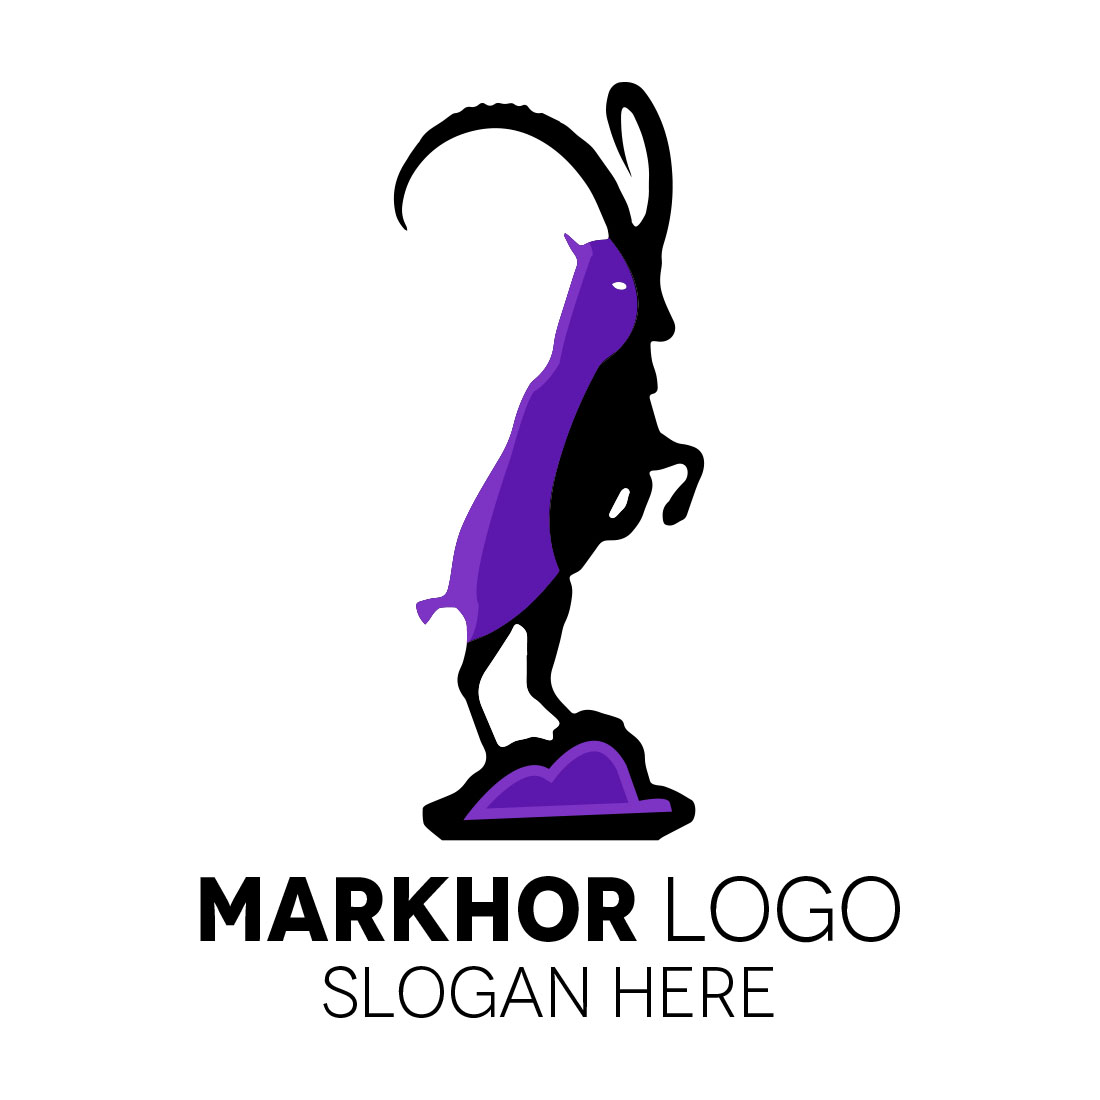 Markhor Mascot Logo Template Design cover image.